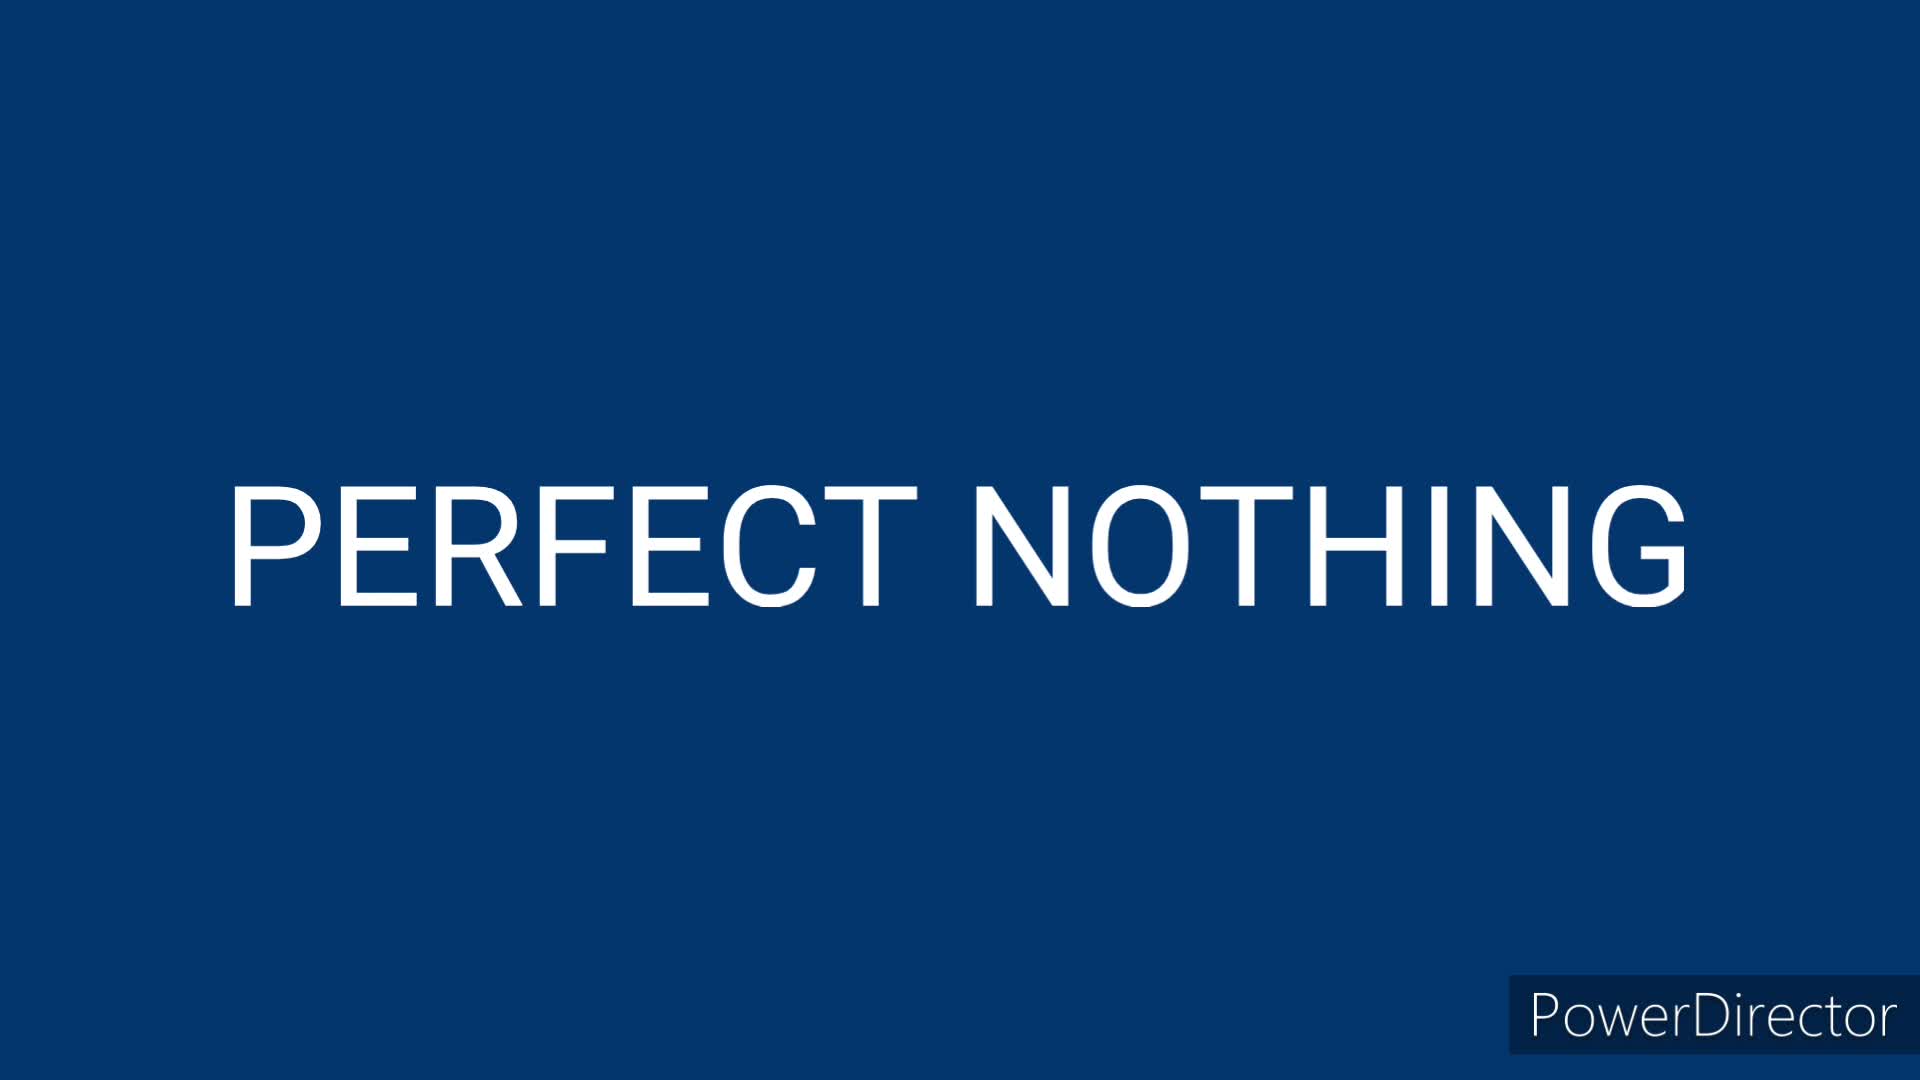 PERFECT NOTHING | MEME